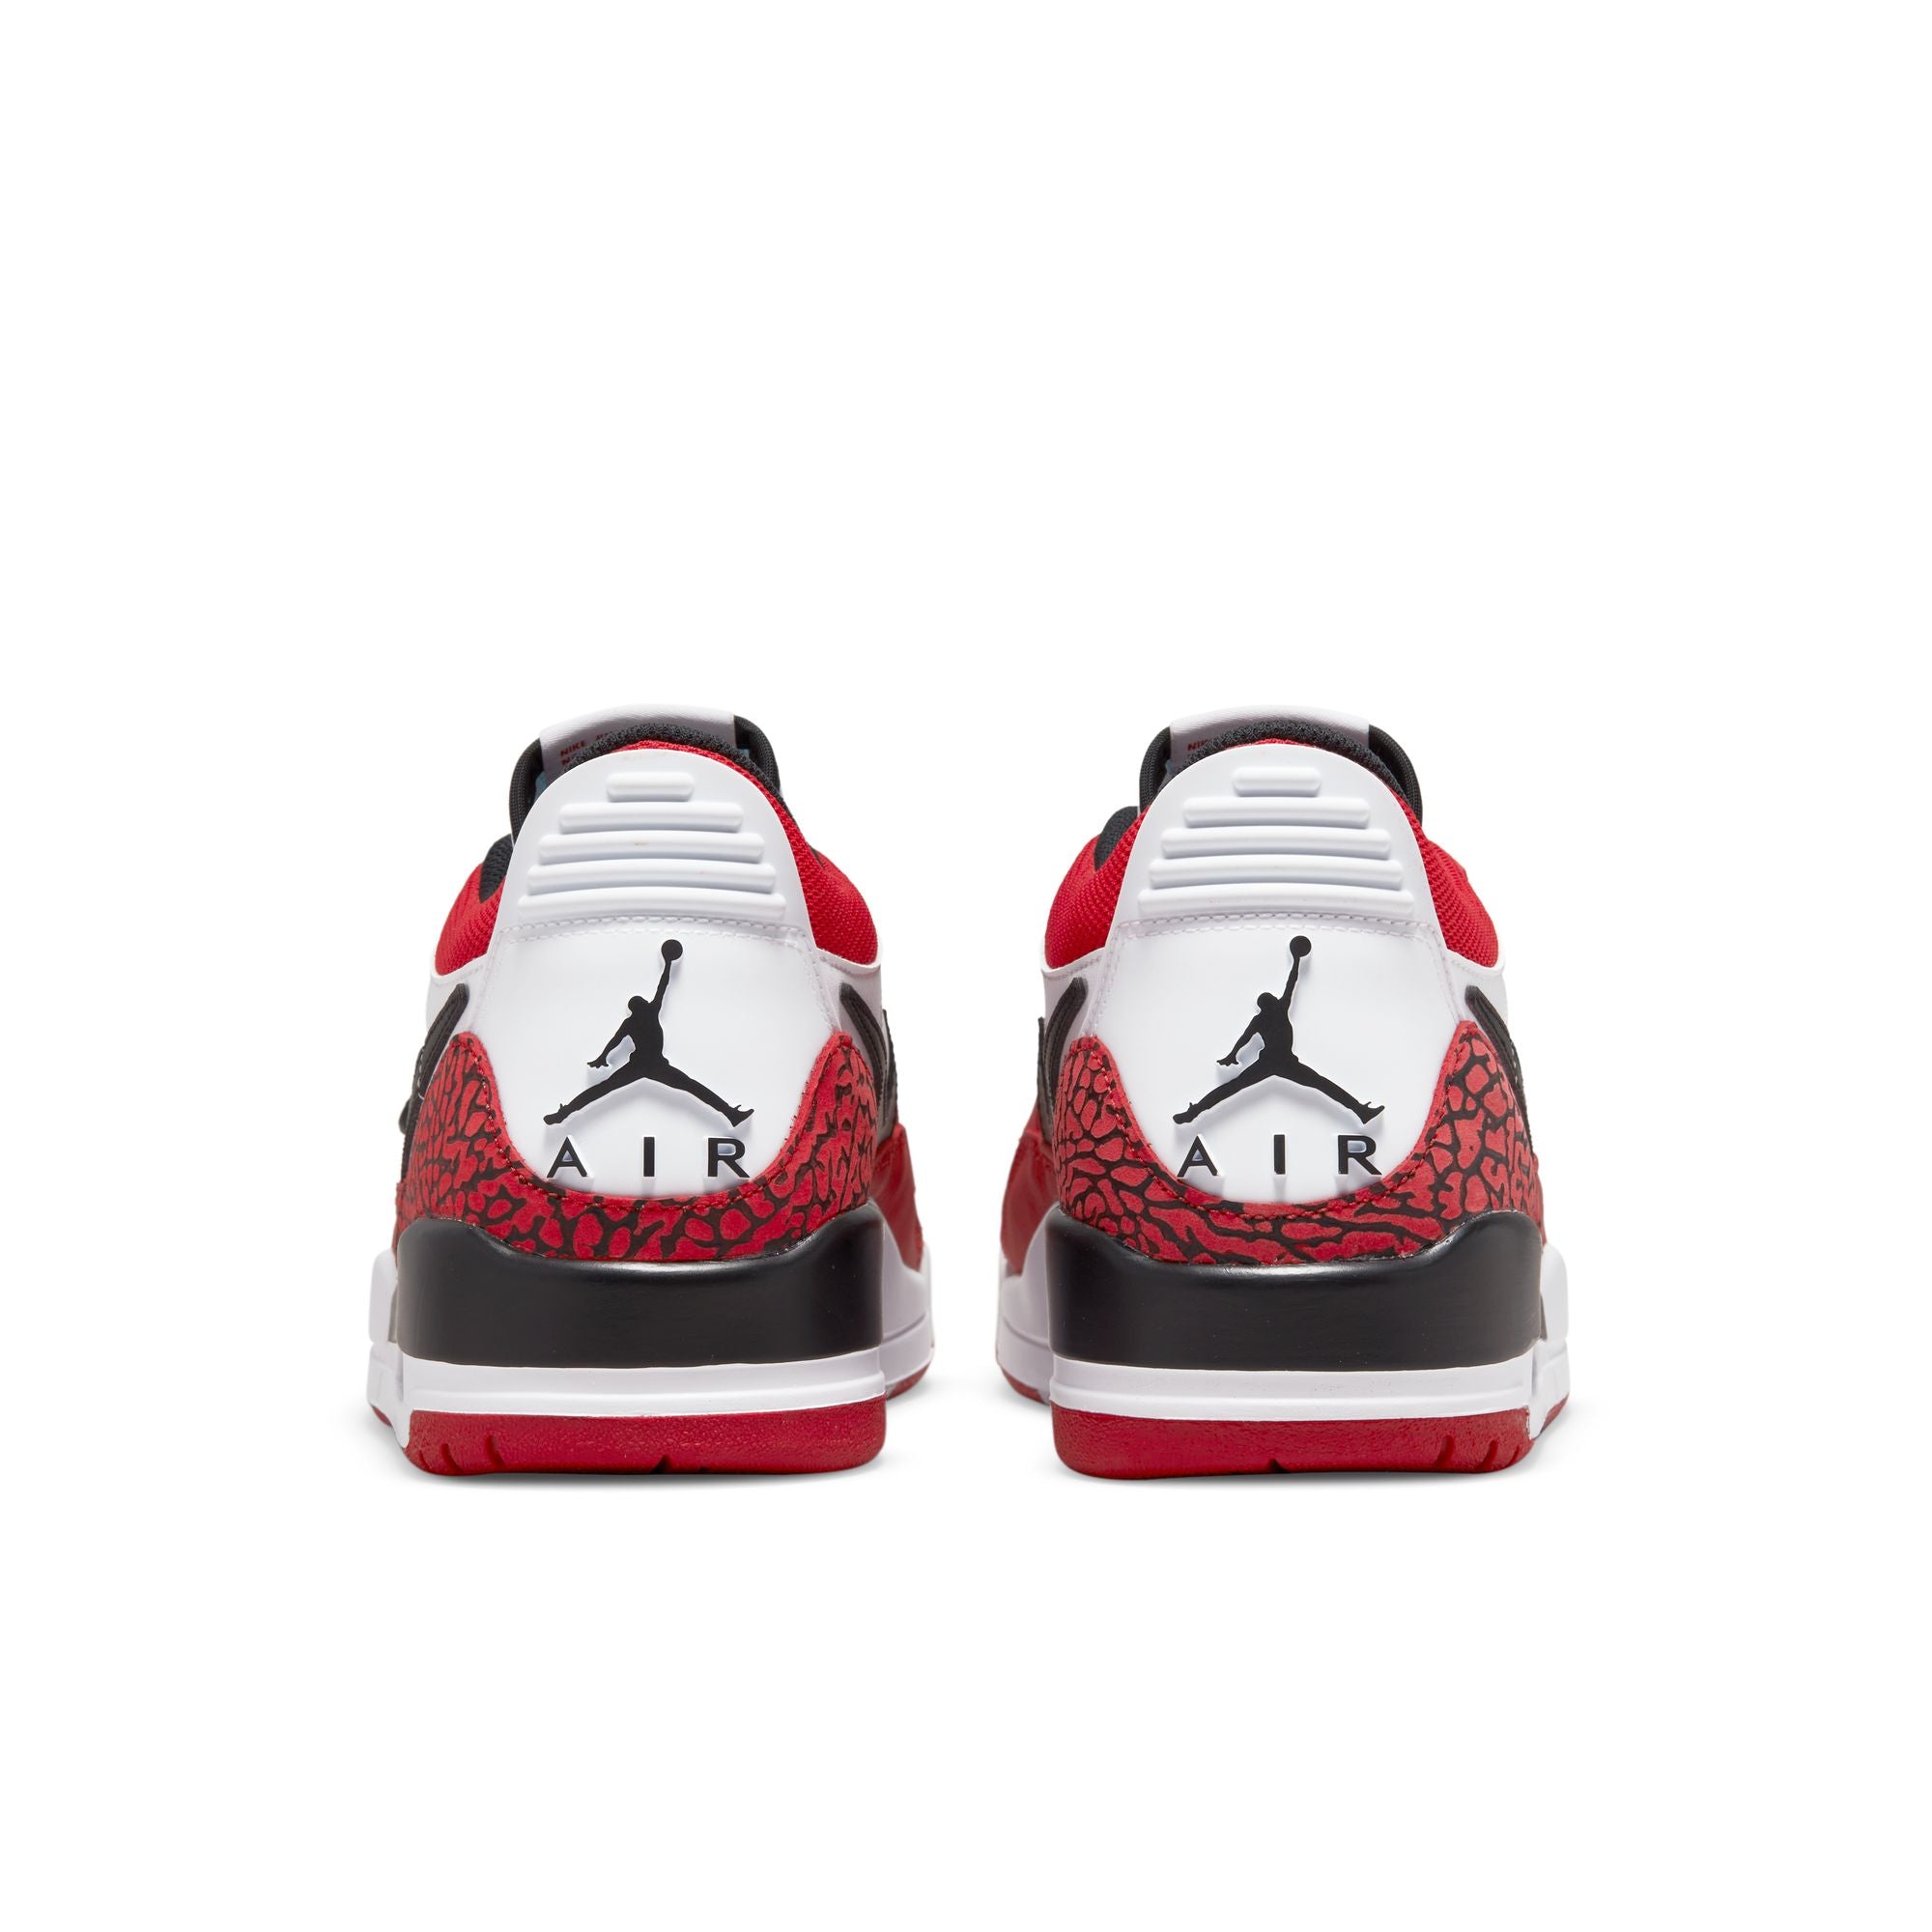 Air Jordan Legacy 312 Low 'White/Red/Black'